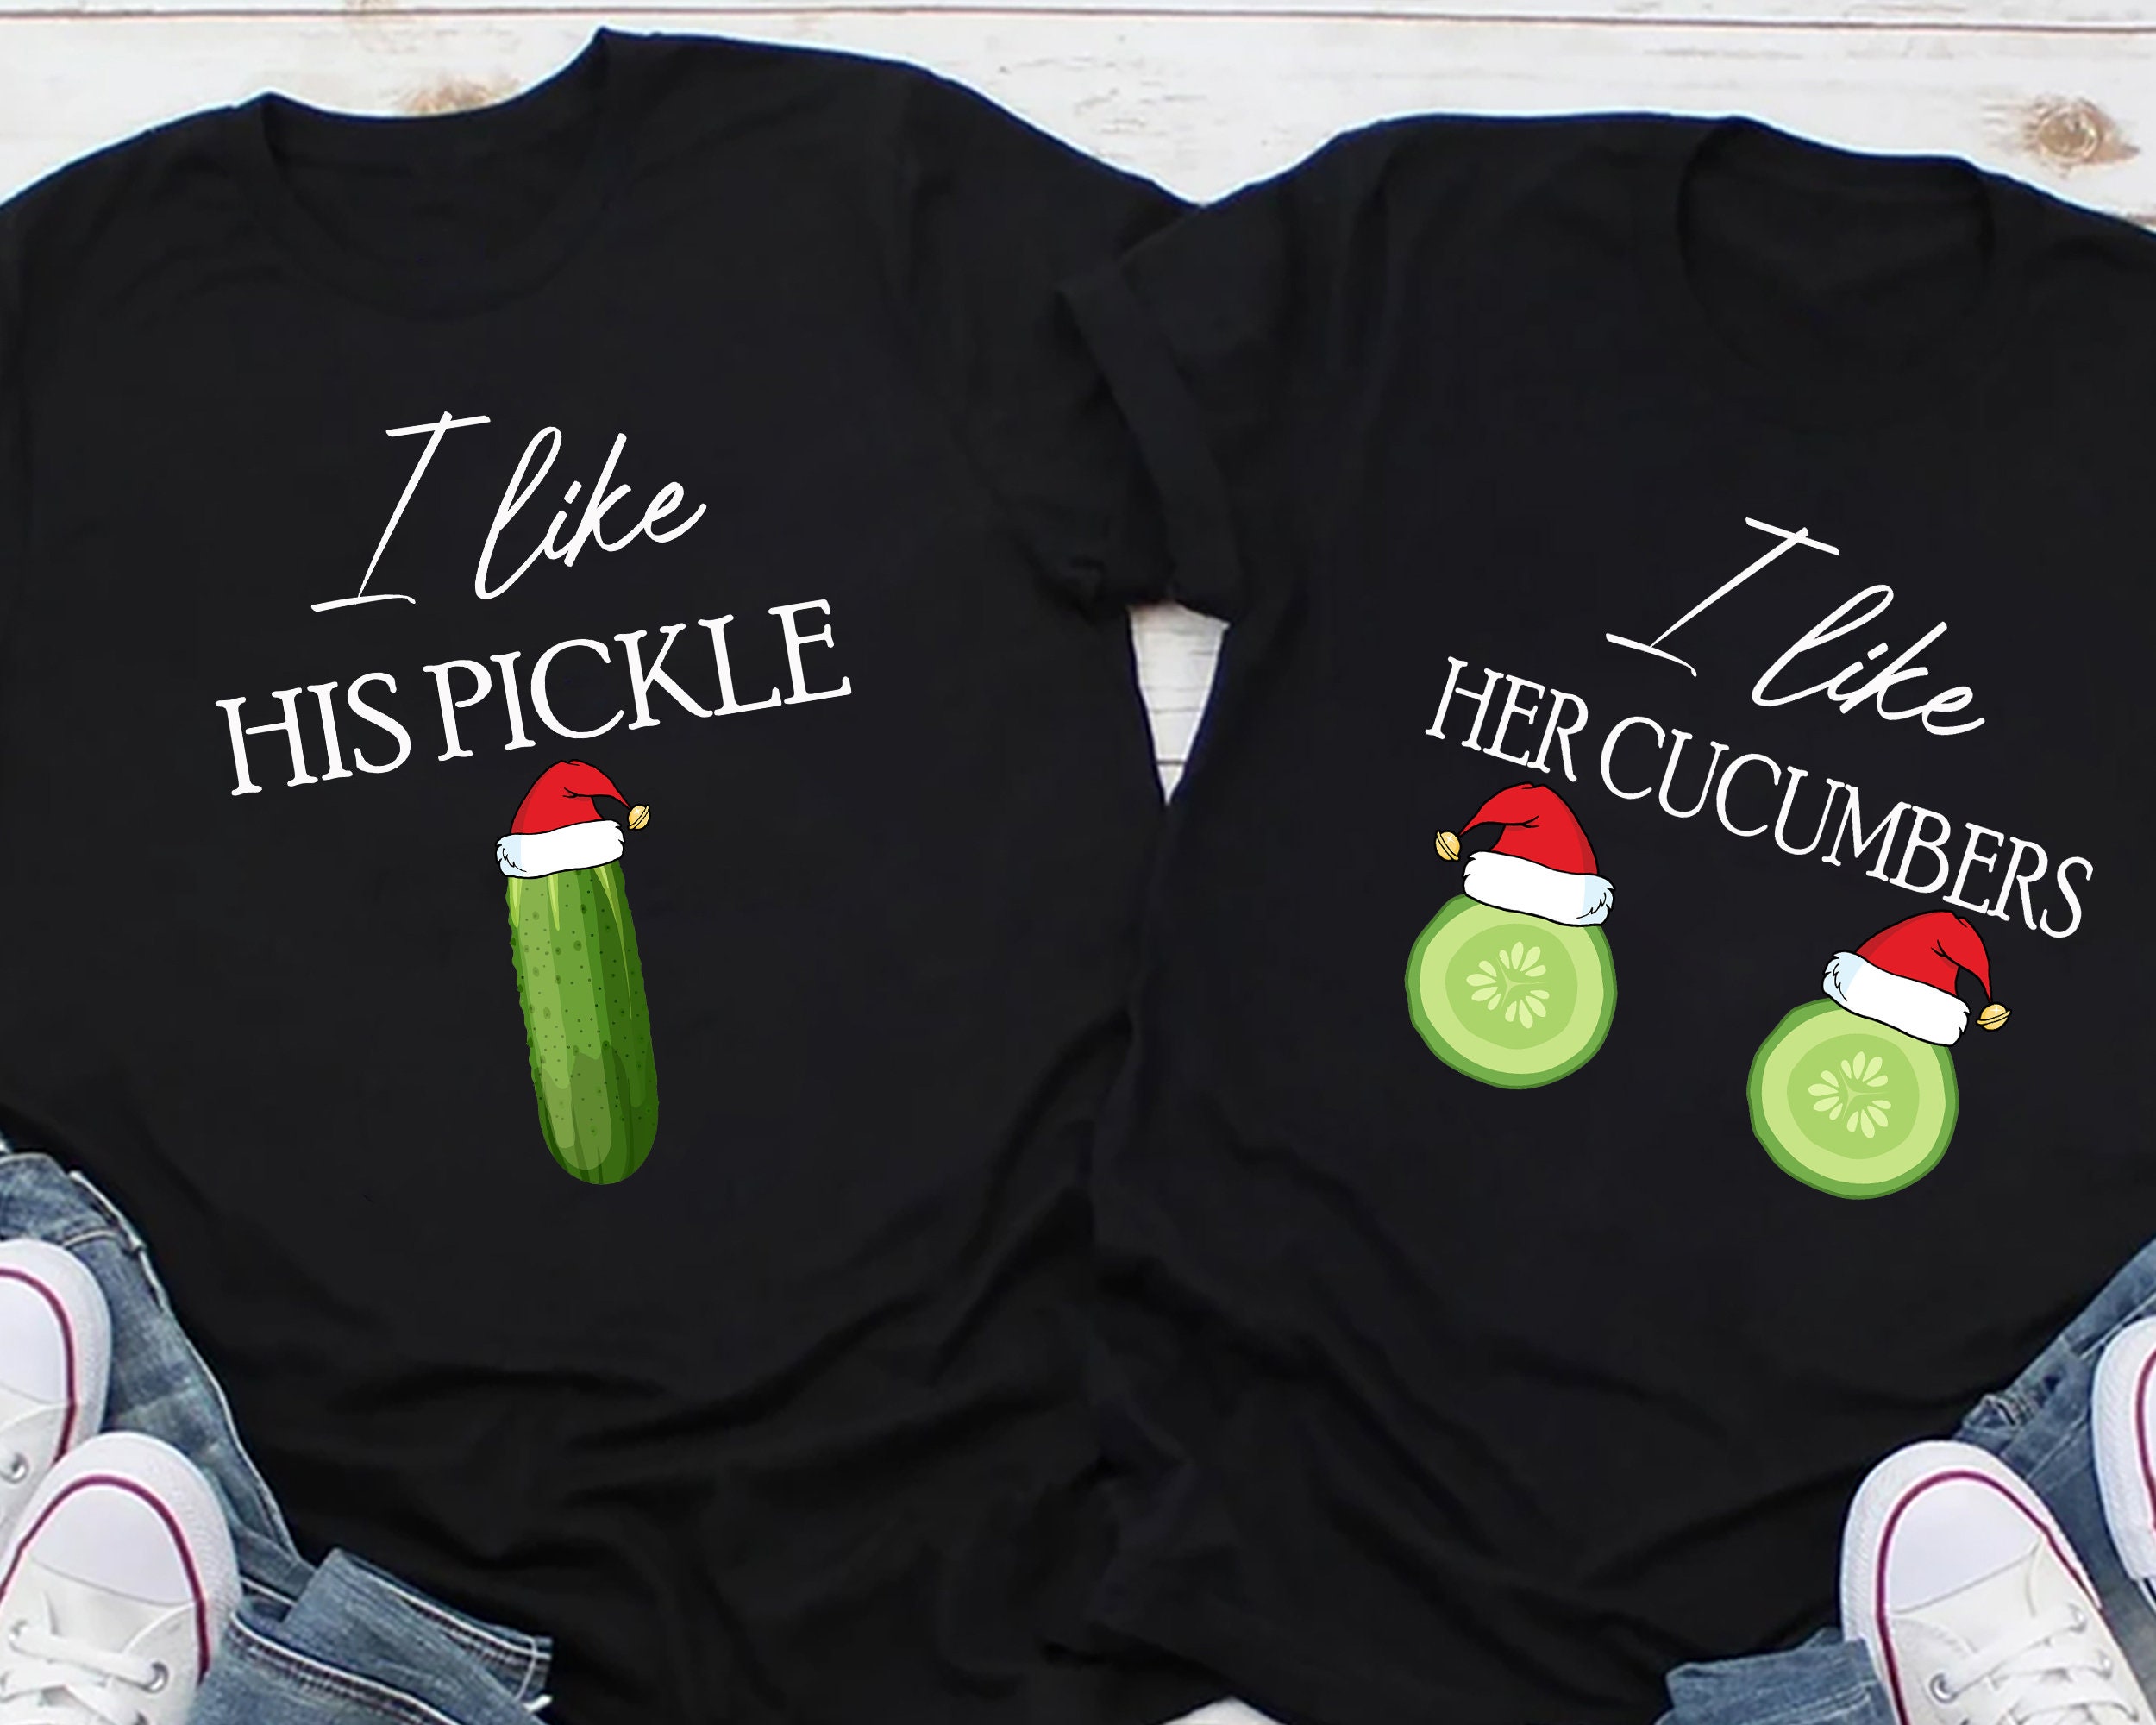 Puck Hcky Scores Mr. Pickles' Apparel